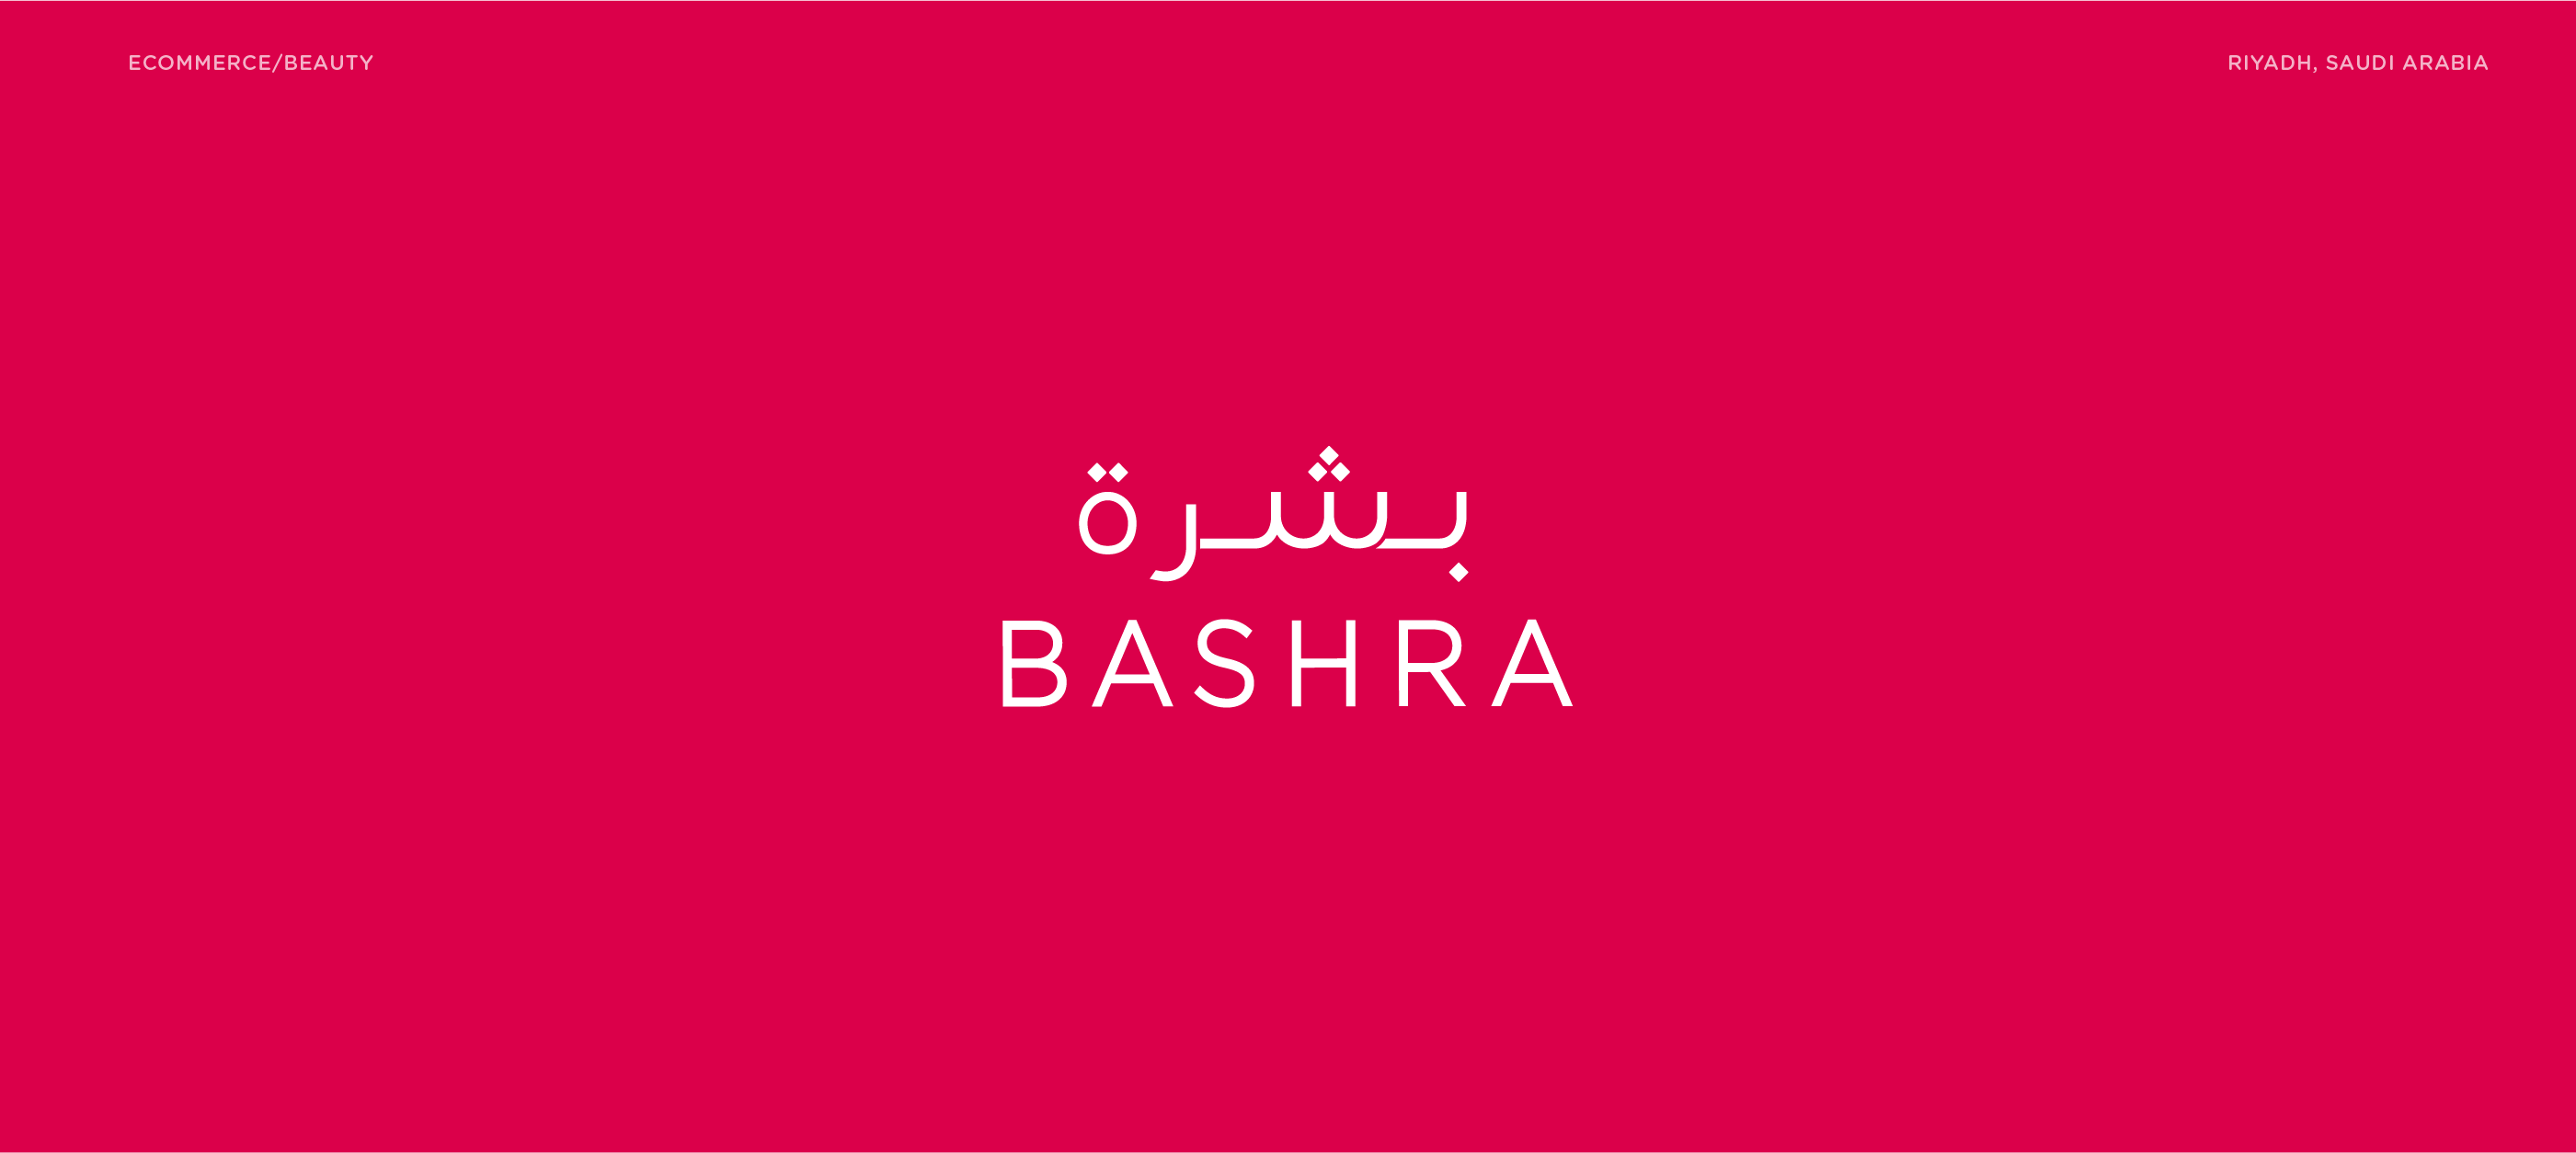 Bashra – online beauty store